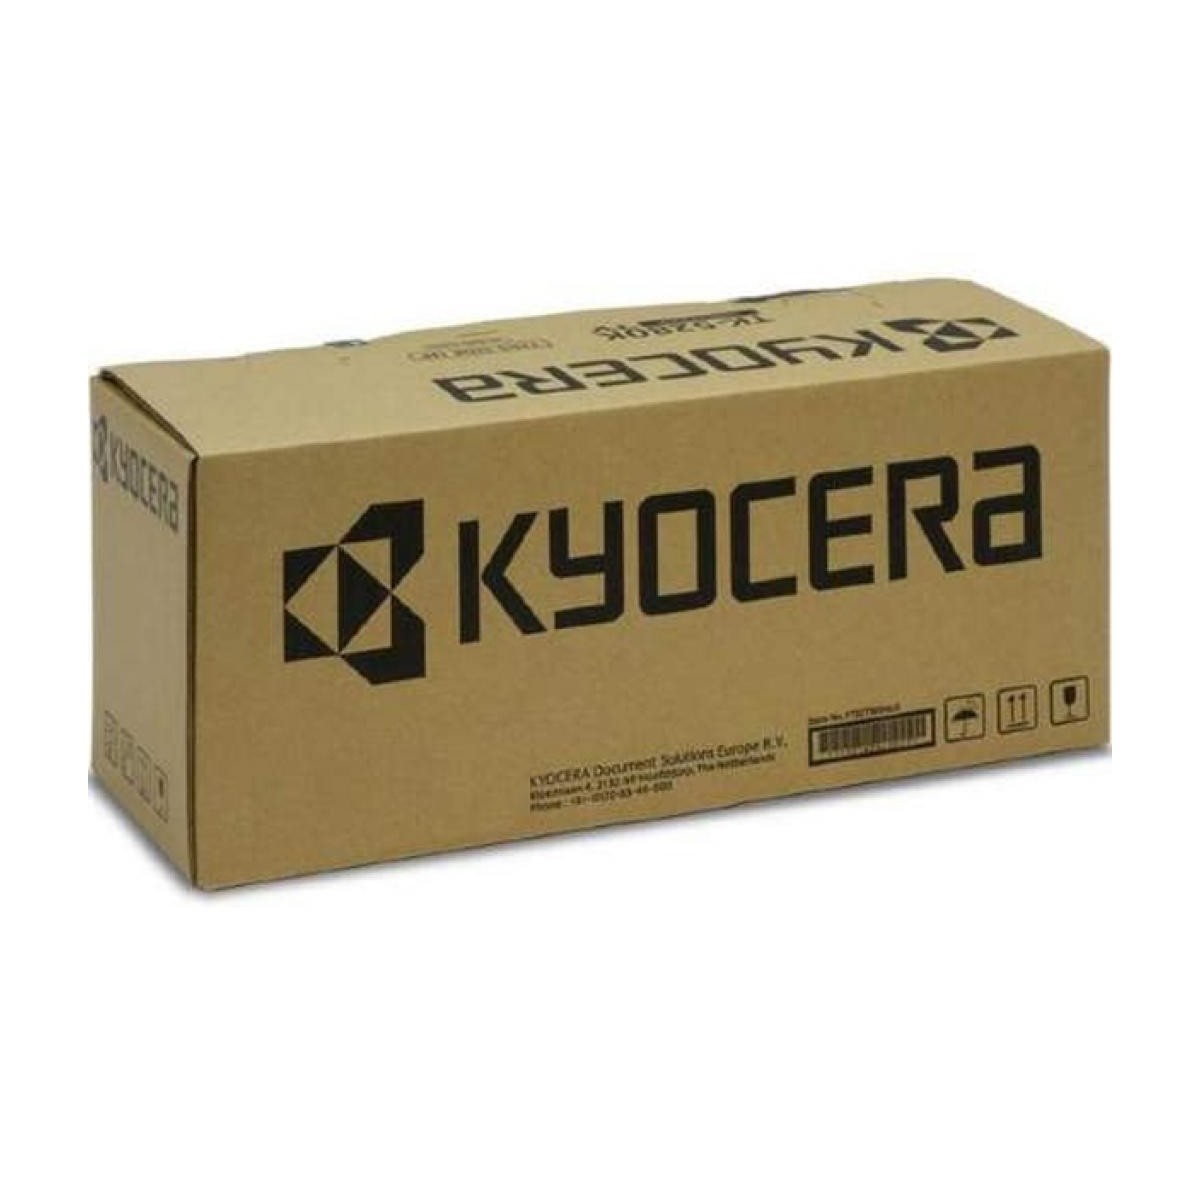 Kyocera FK-3300